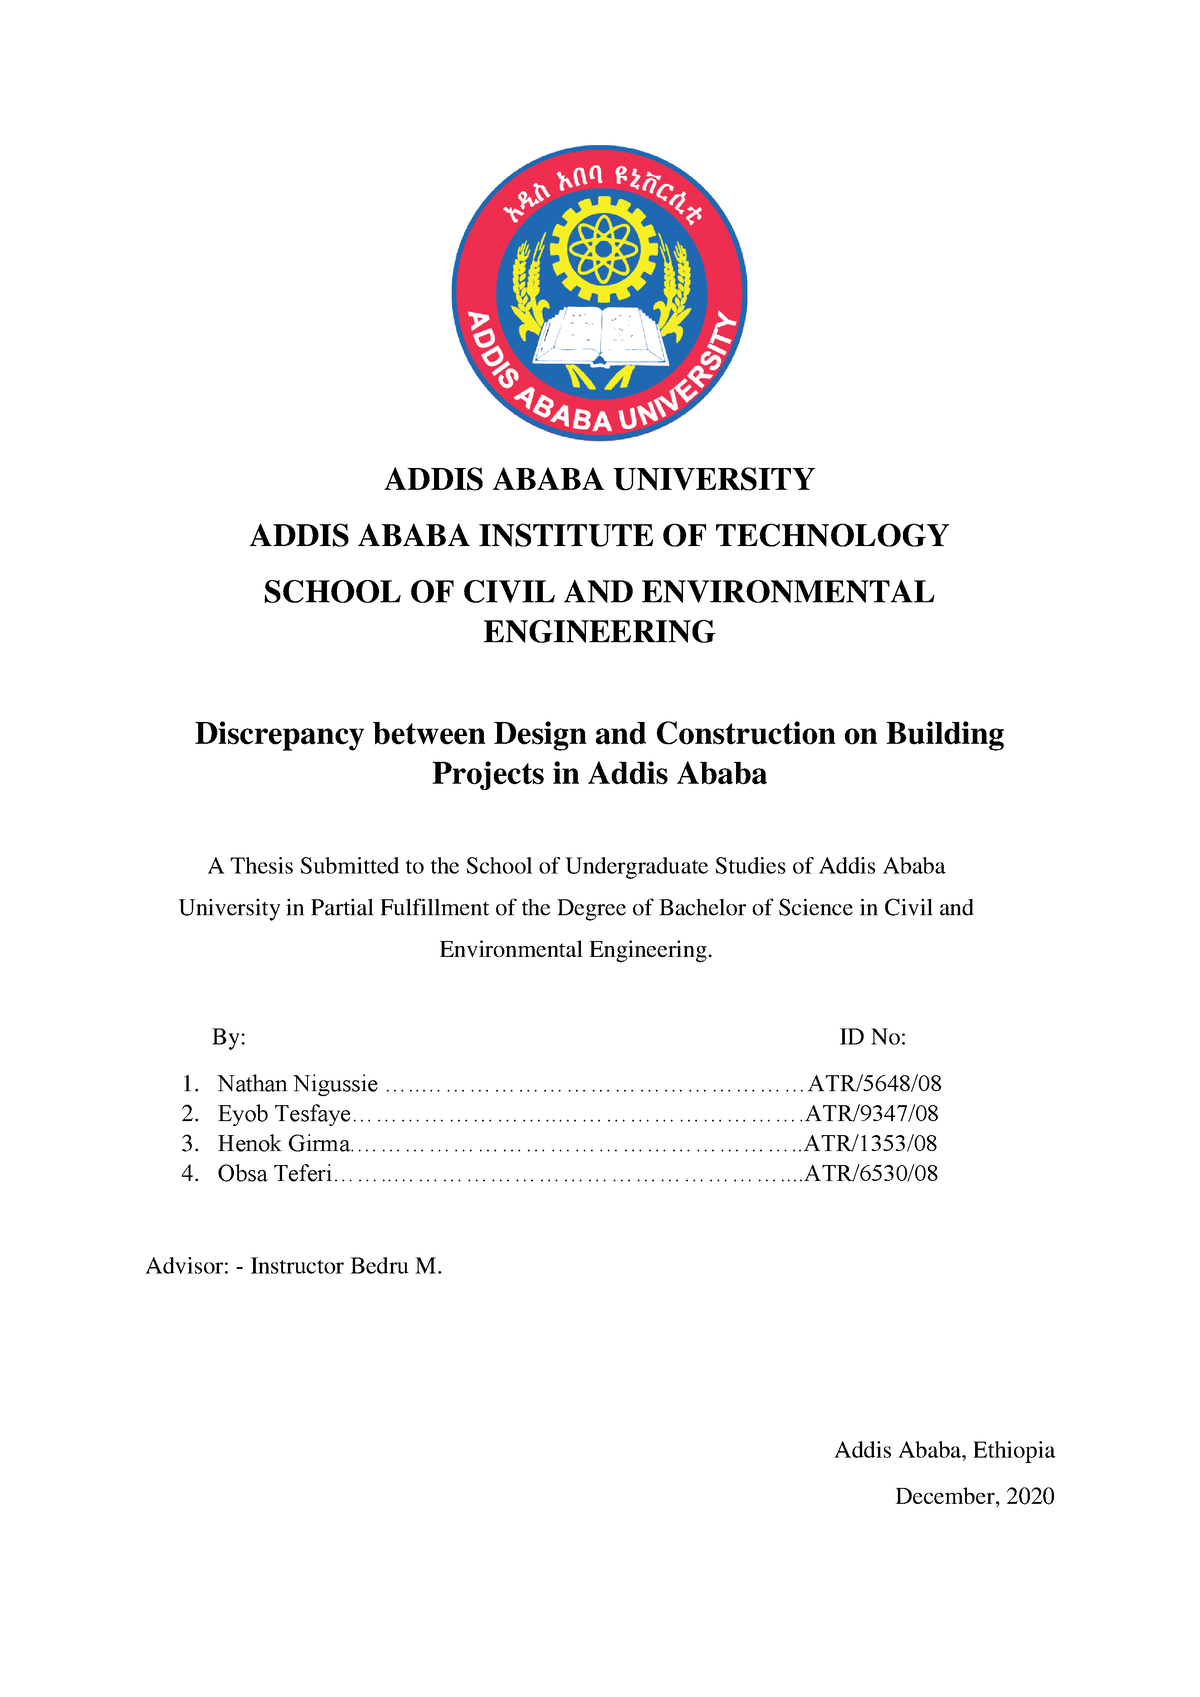 electronic thesis and dissertation addis ababa university